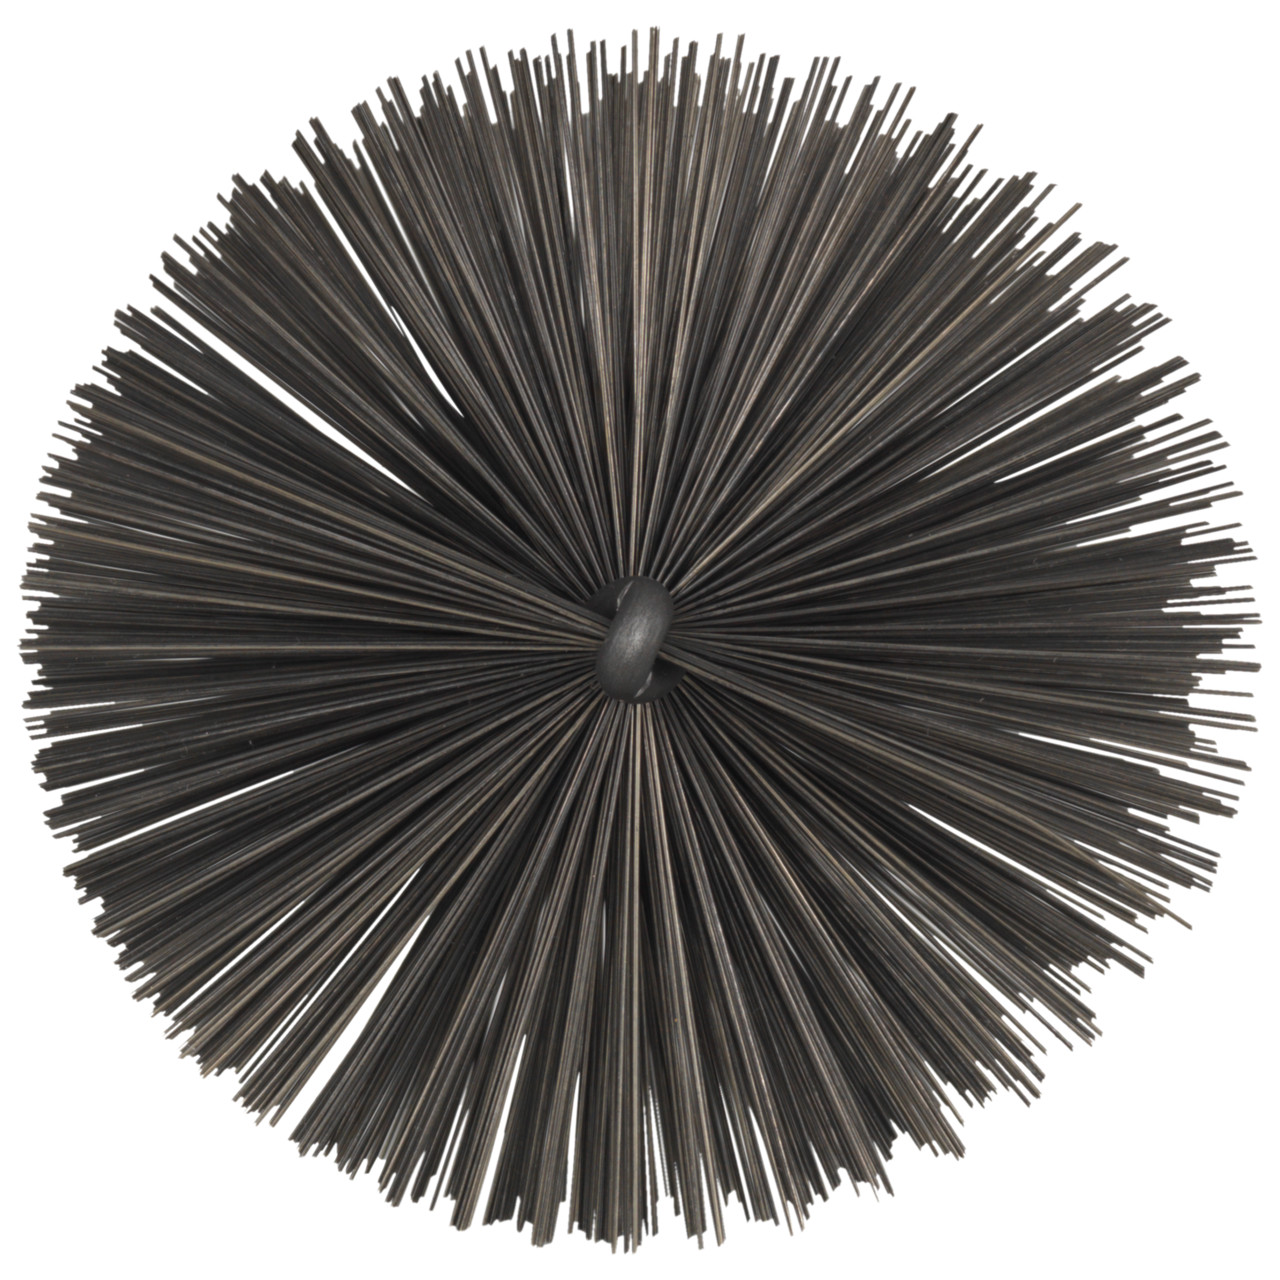 Tyrolit Cepillo para tubos con rosca exterior DxGE-I 75xW1/2-160 Para acero, forma: 18ROGDG - (cepillo para tubos), Art. 34203607